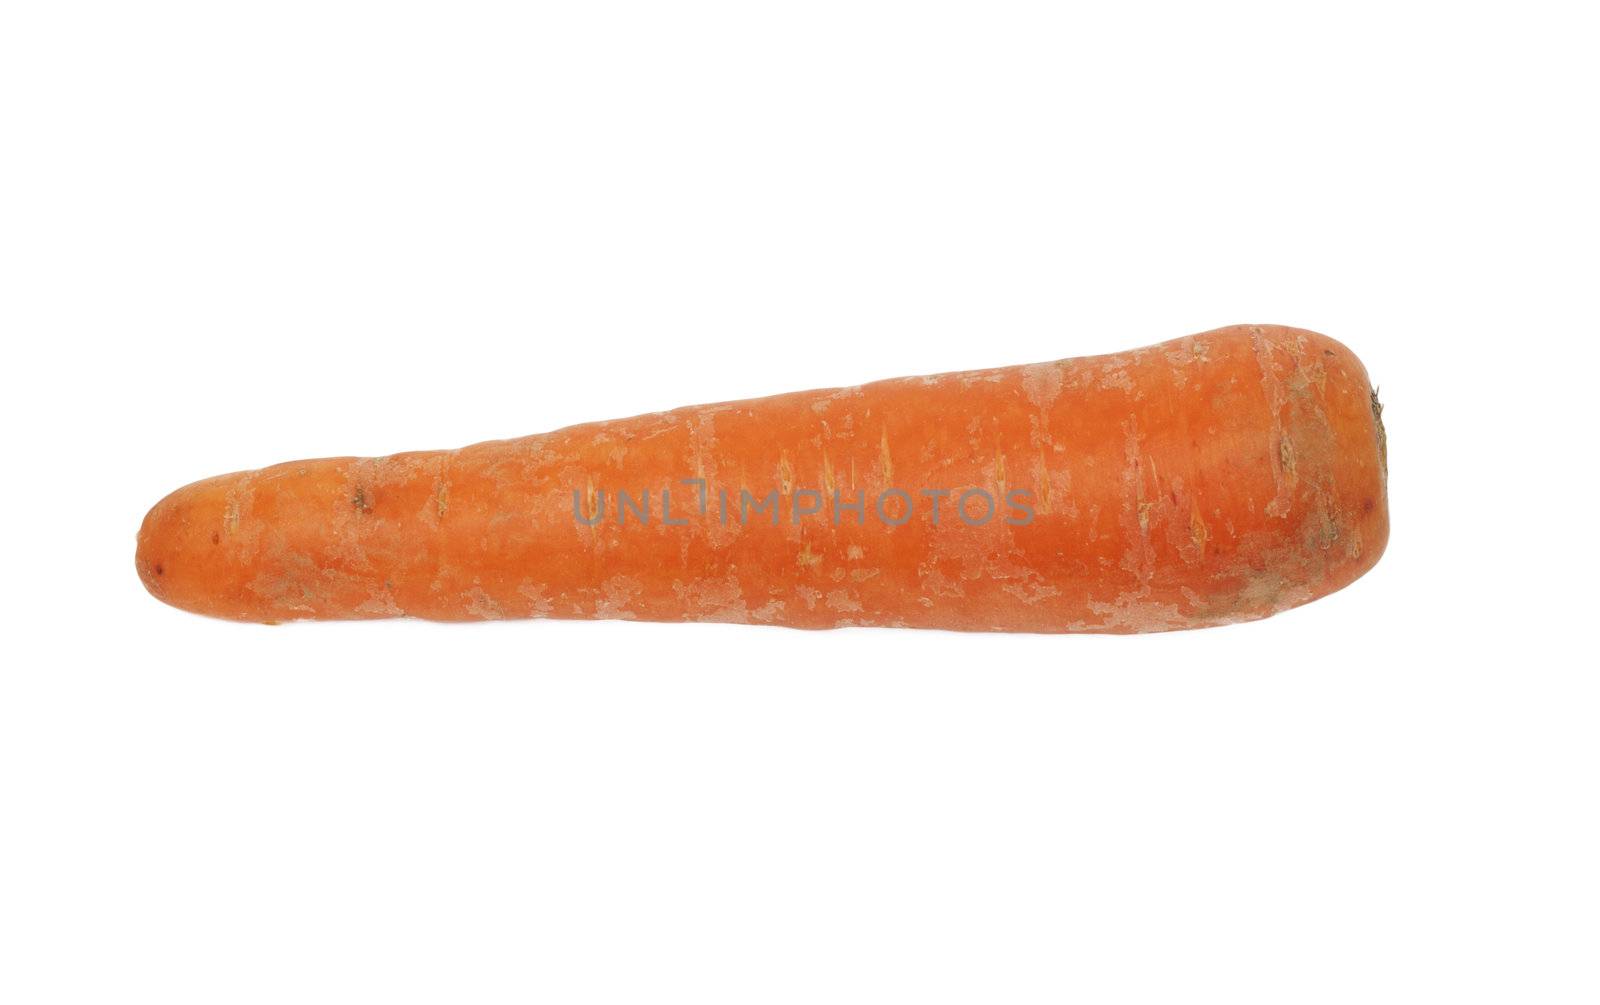 Fresh red carrot on white background  by schankz